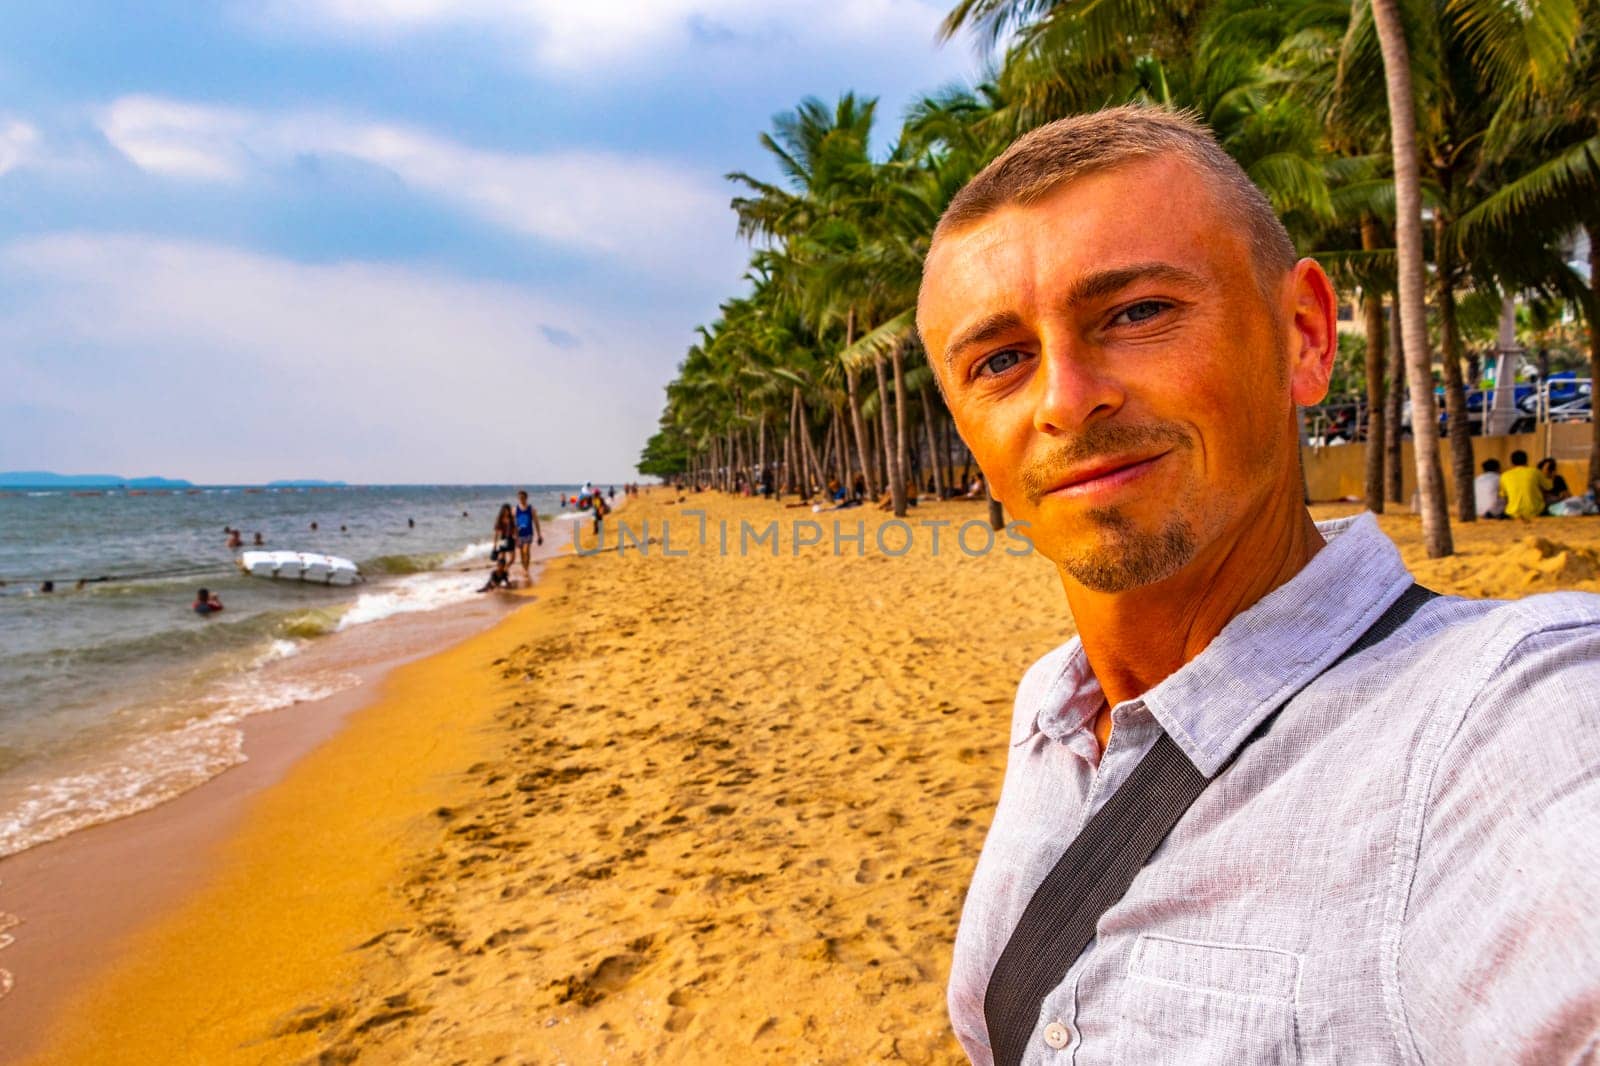 Tourist takes selfie beach waves sand people palm Pattaya Thailand. by Arkadij